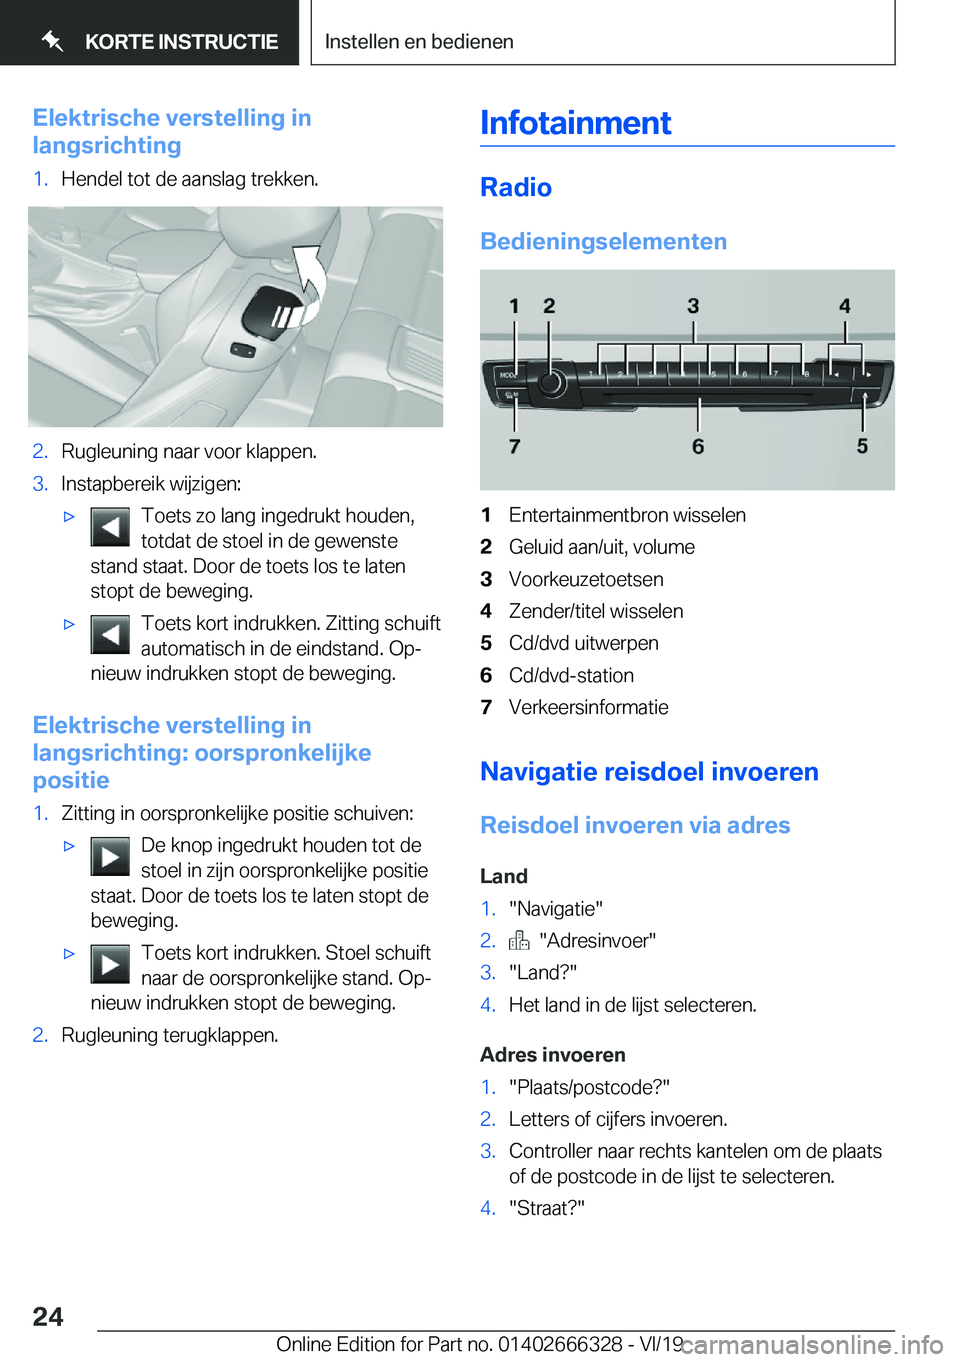 BMW 4 SERIES COUPE 2020  Instructieboekjes (in Dutch) �E�l�e�k�t�r�i�s�c�h�e��v�e�r�s�t�e�l�l�i�n�g��i�n
�l�a�n�g�s�r�i�c�h�t�i�n�g�1�.�H�e�n�d�e�l��t�o�t��d�e��a�a�n�s�l�a�g��t�r�e�k�k�e�n�.�2�.�R�u�g�l�e�u�n�i�n�g��n�a�a�r��v�o�o�r��k�l�a�p�p�